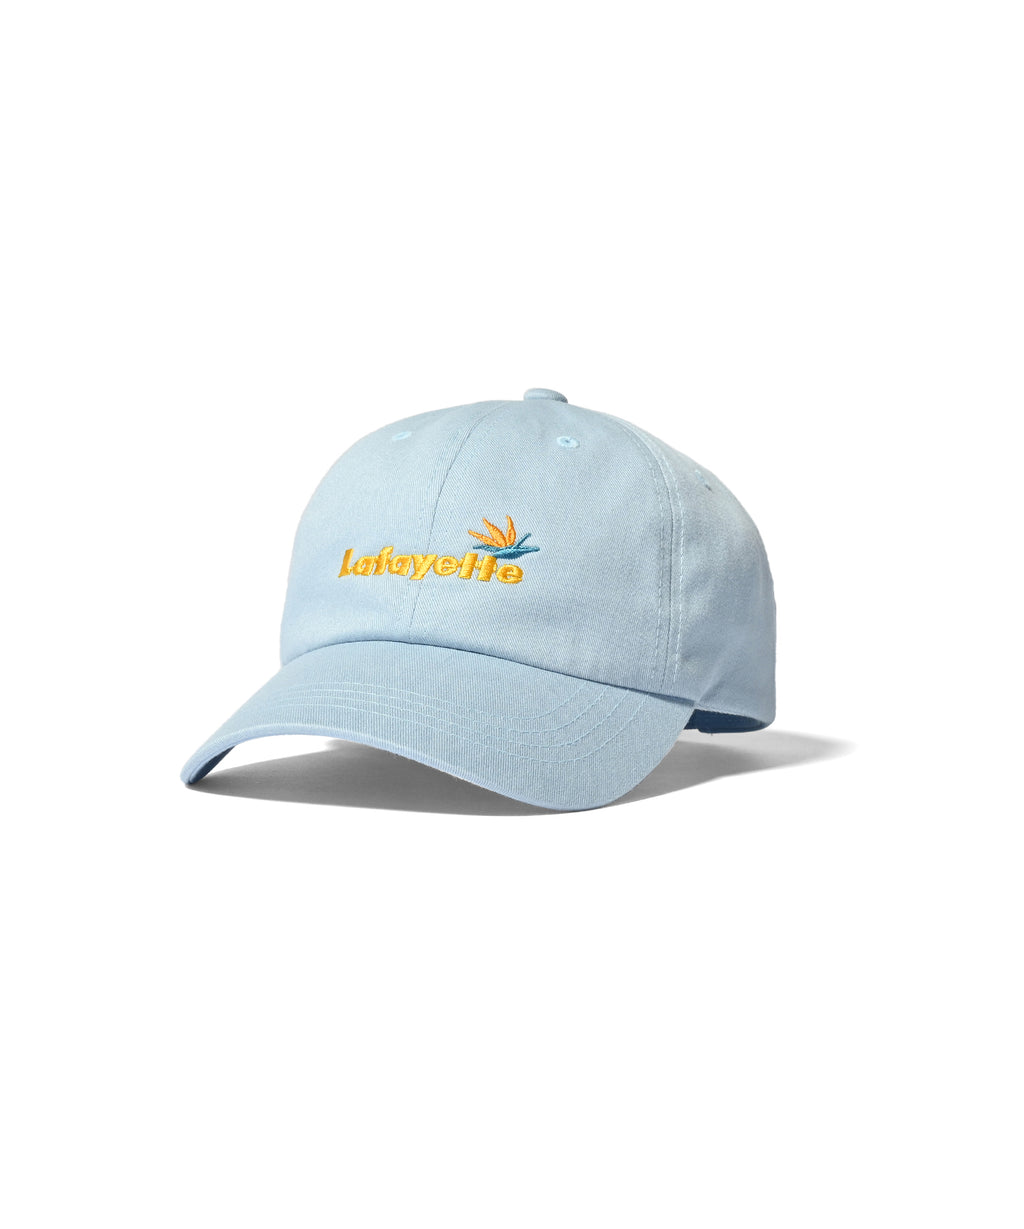 LFYT Lafayette SMALL FLOWER LOGO CAP - STRELITZIA - LE231410